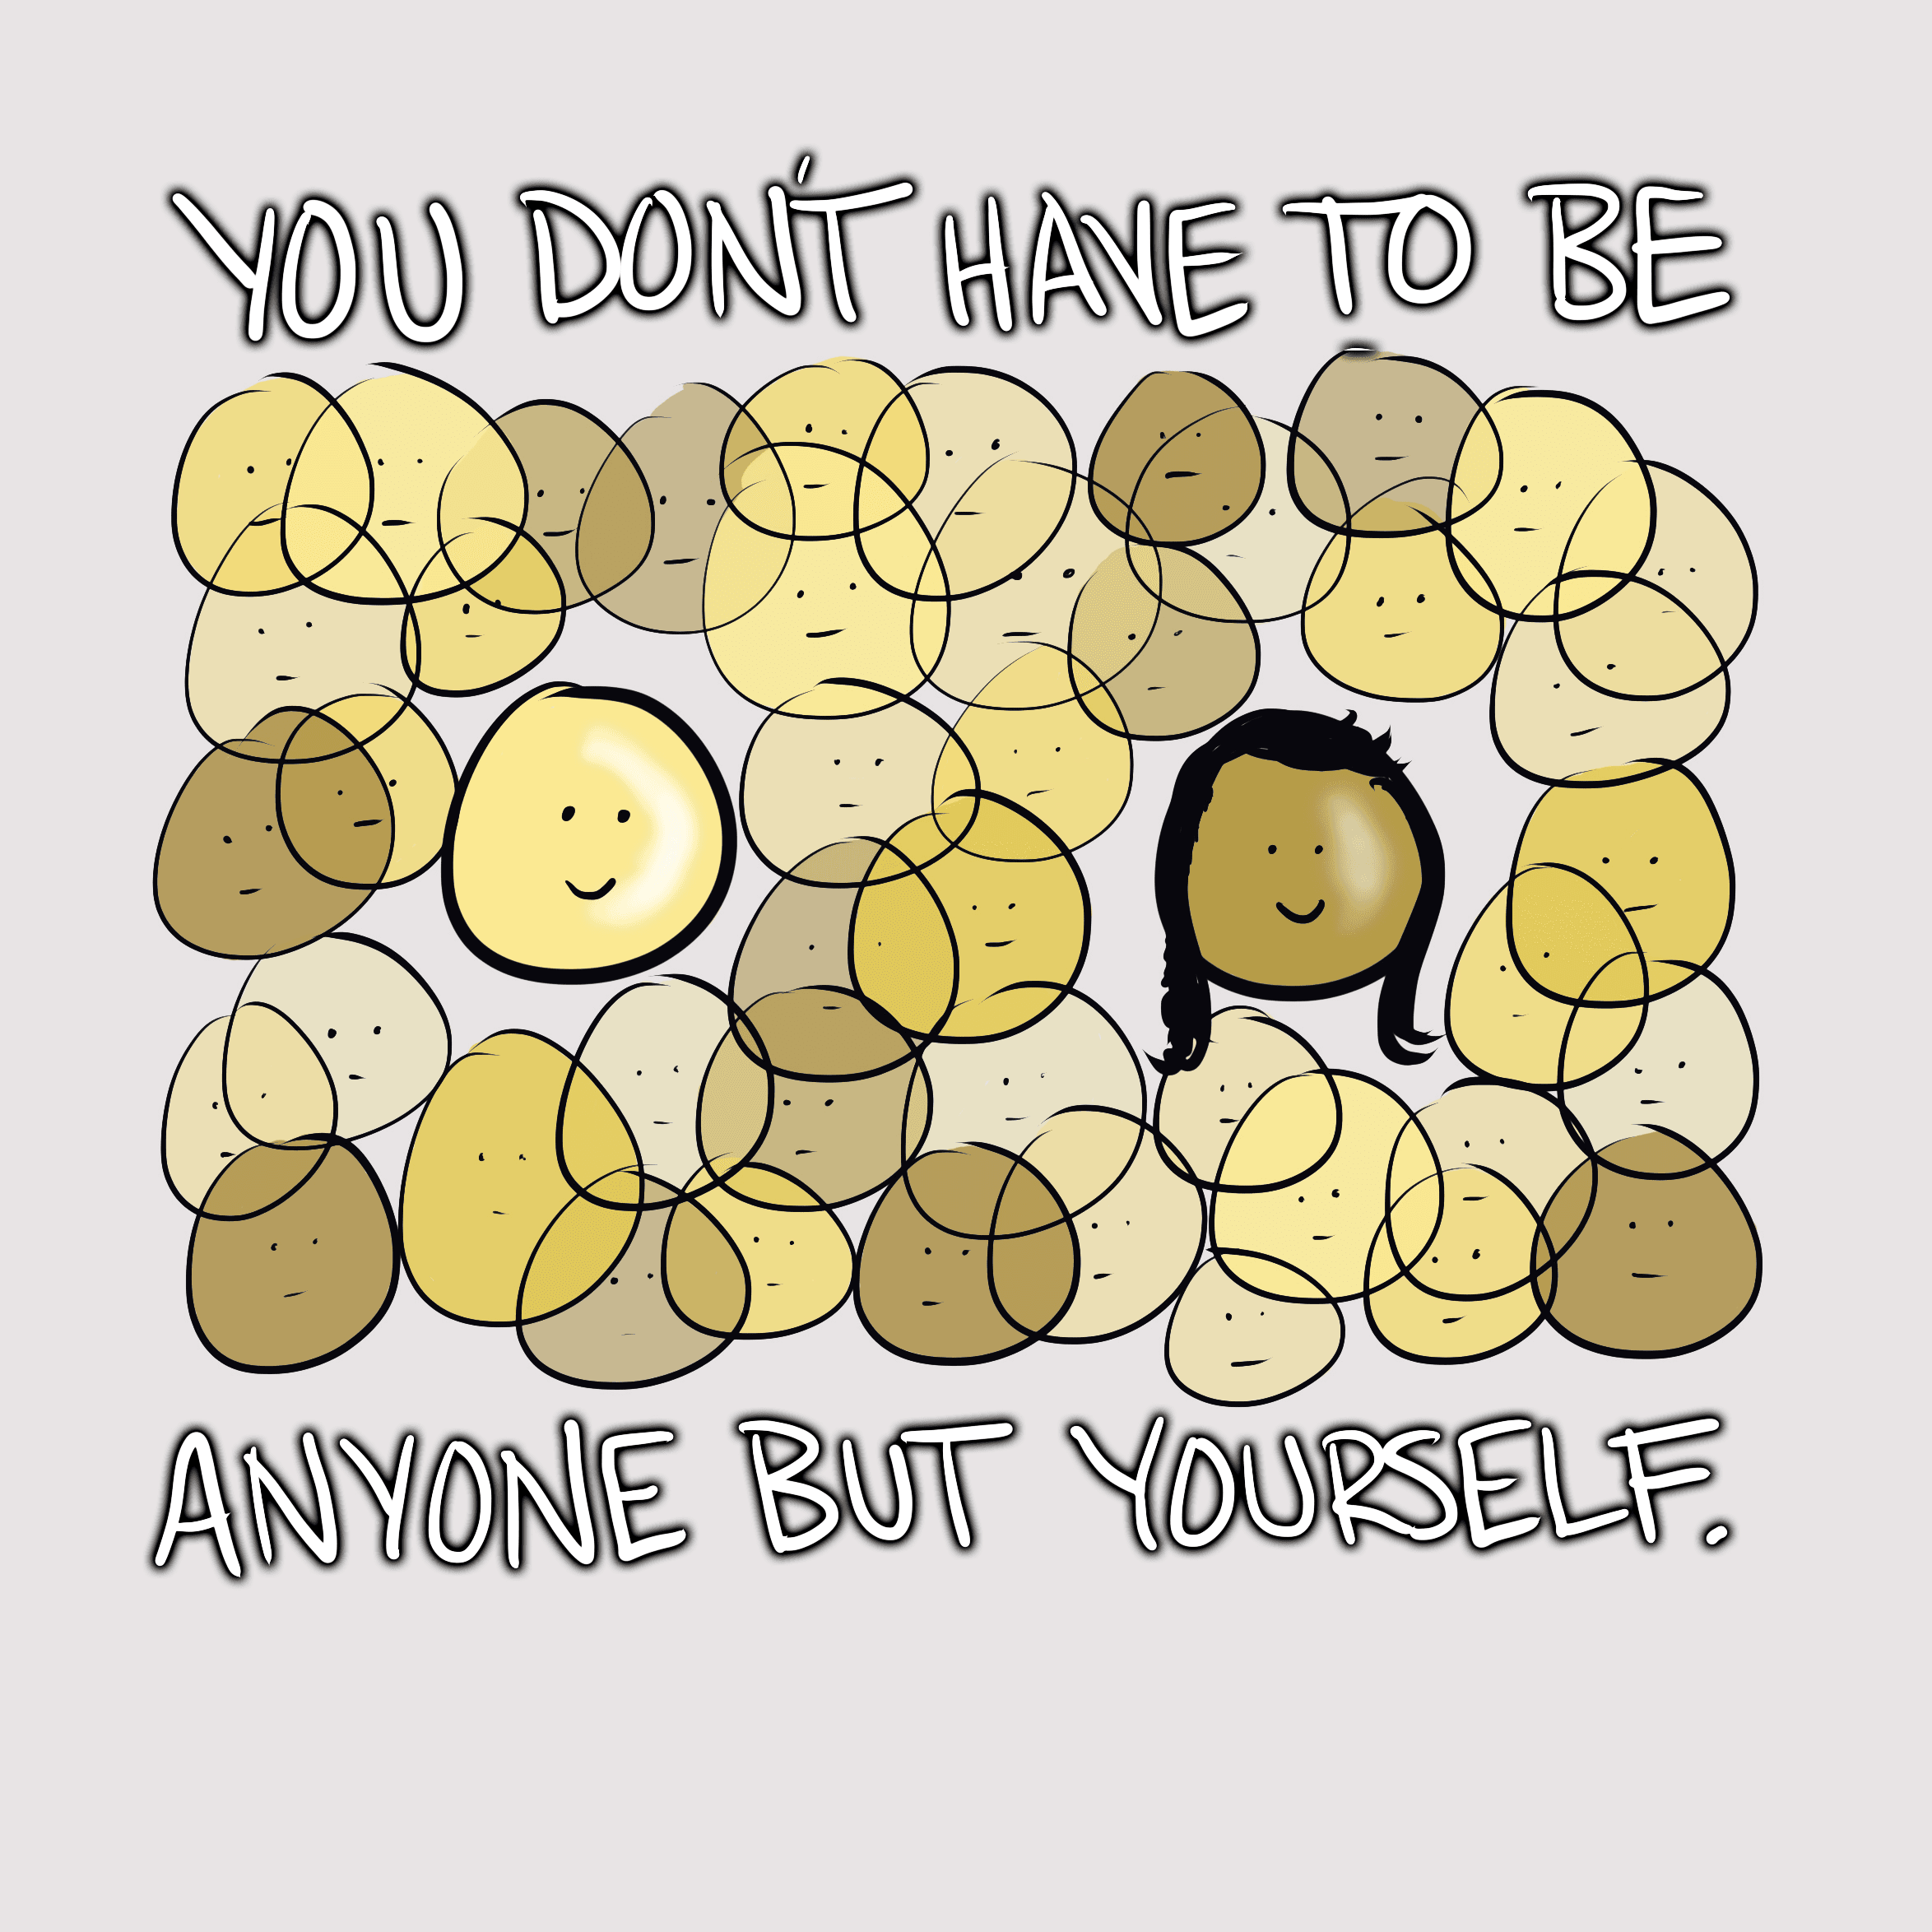 Be You (It's okay)